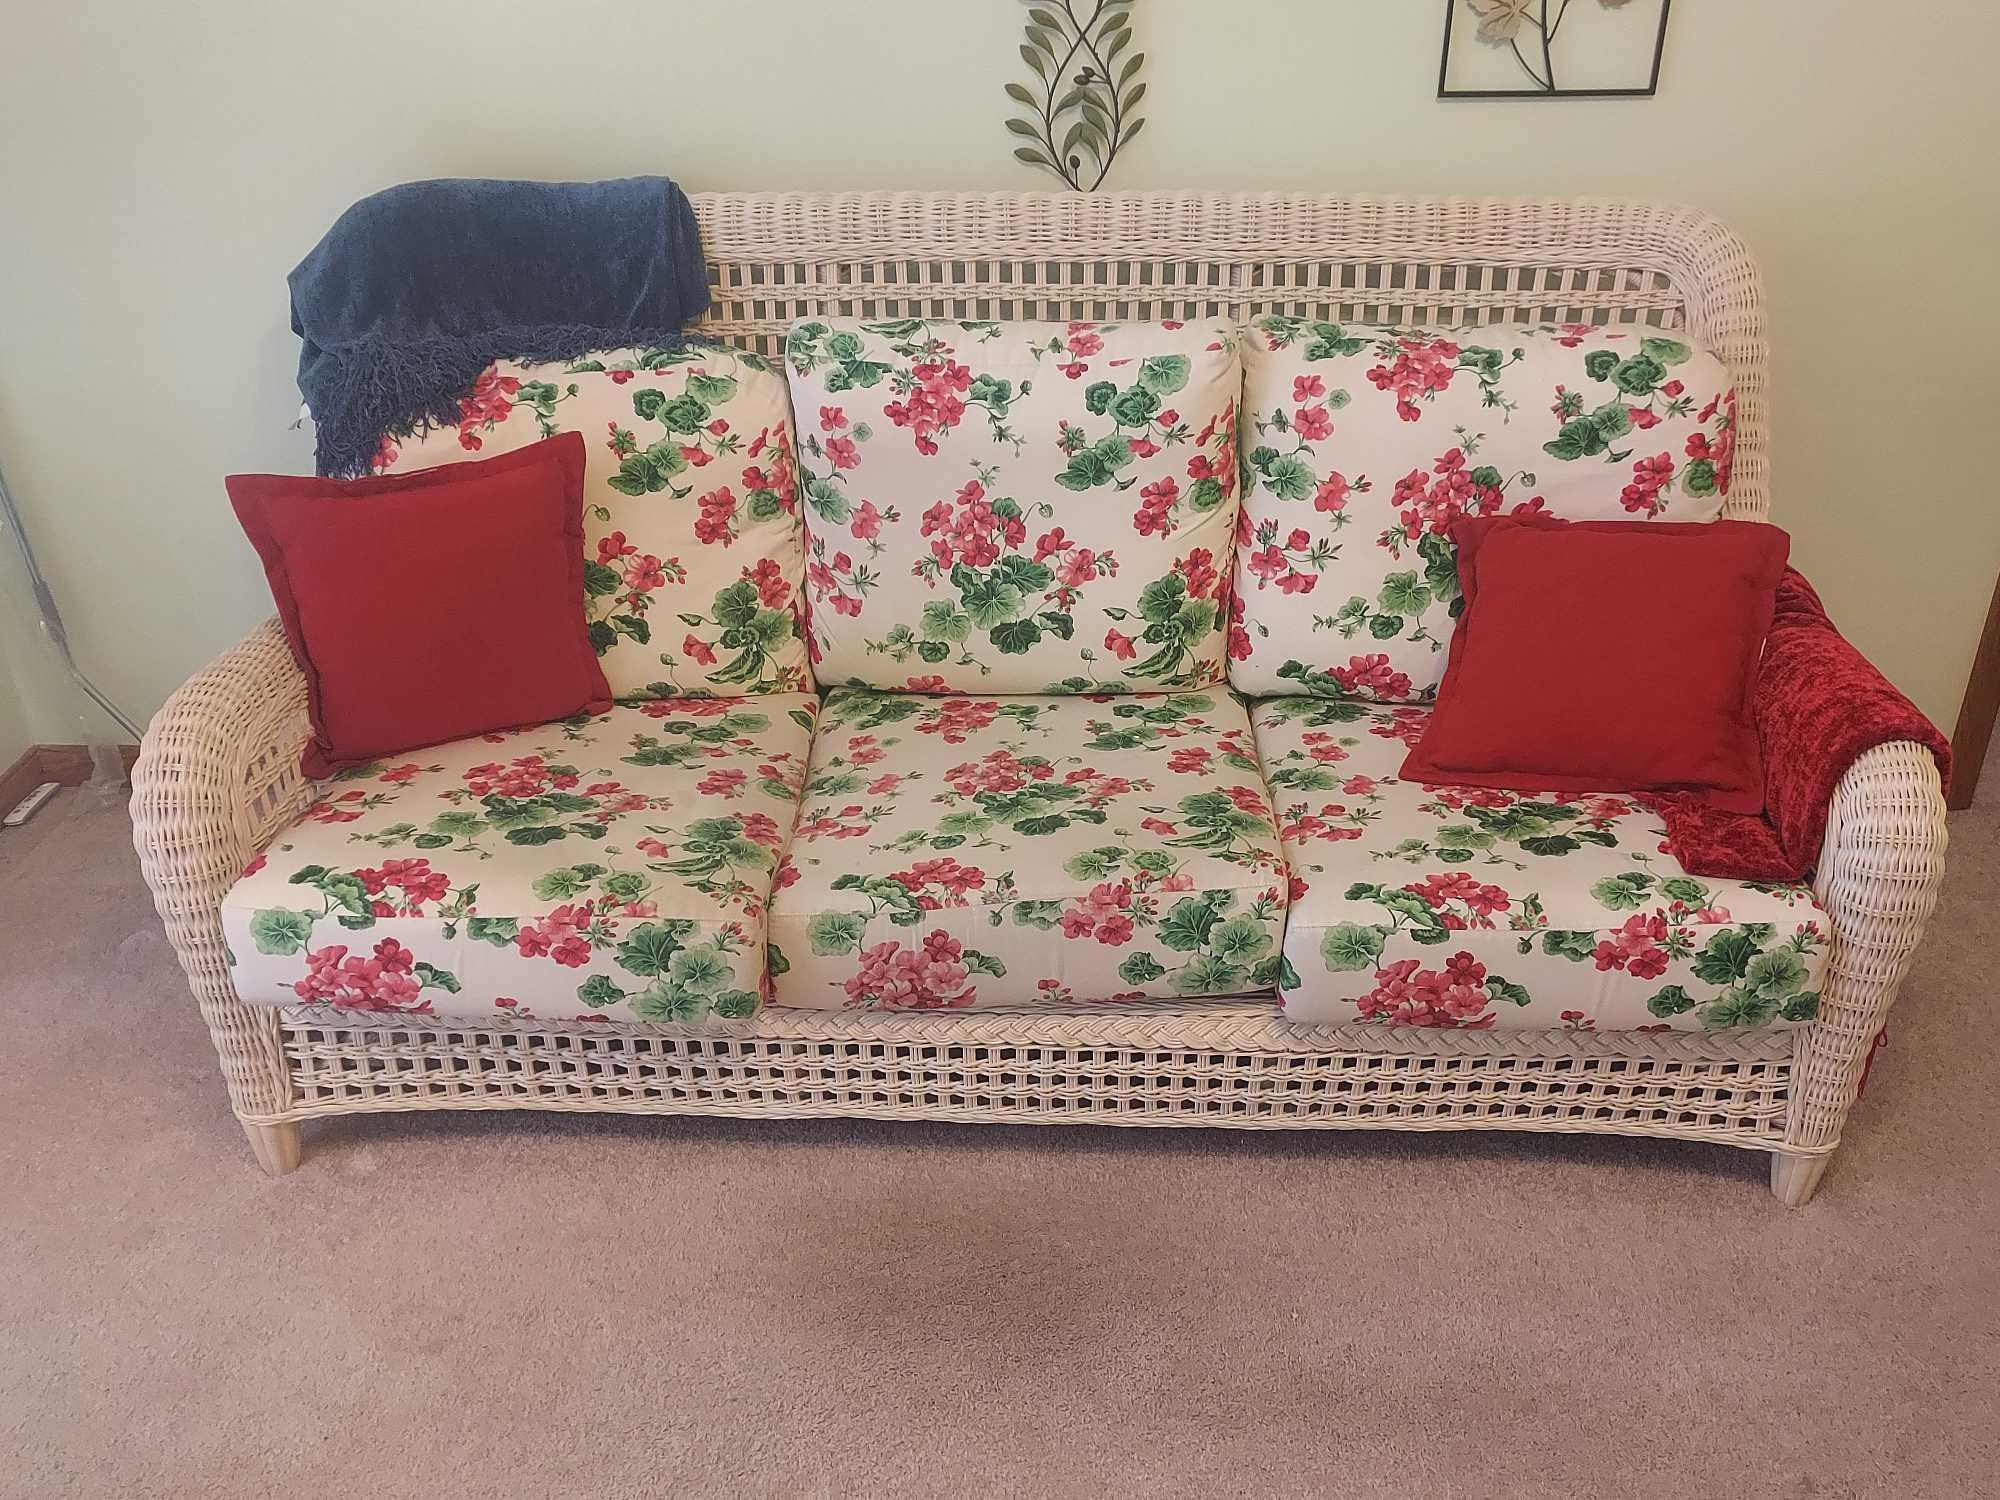 3 Piece Wicker Furniture Set - Couch, Chair, & Ottoman